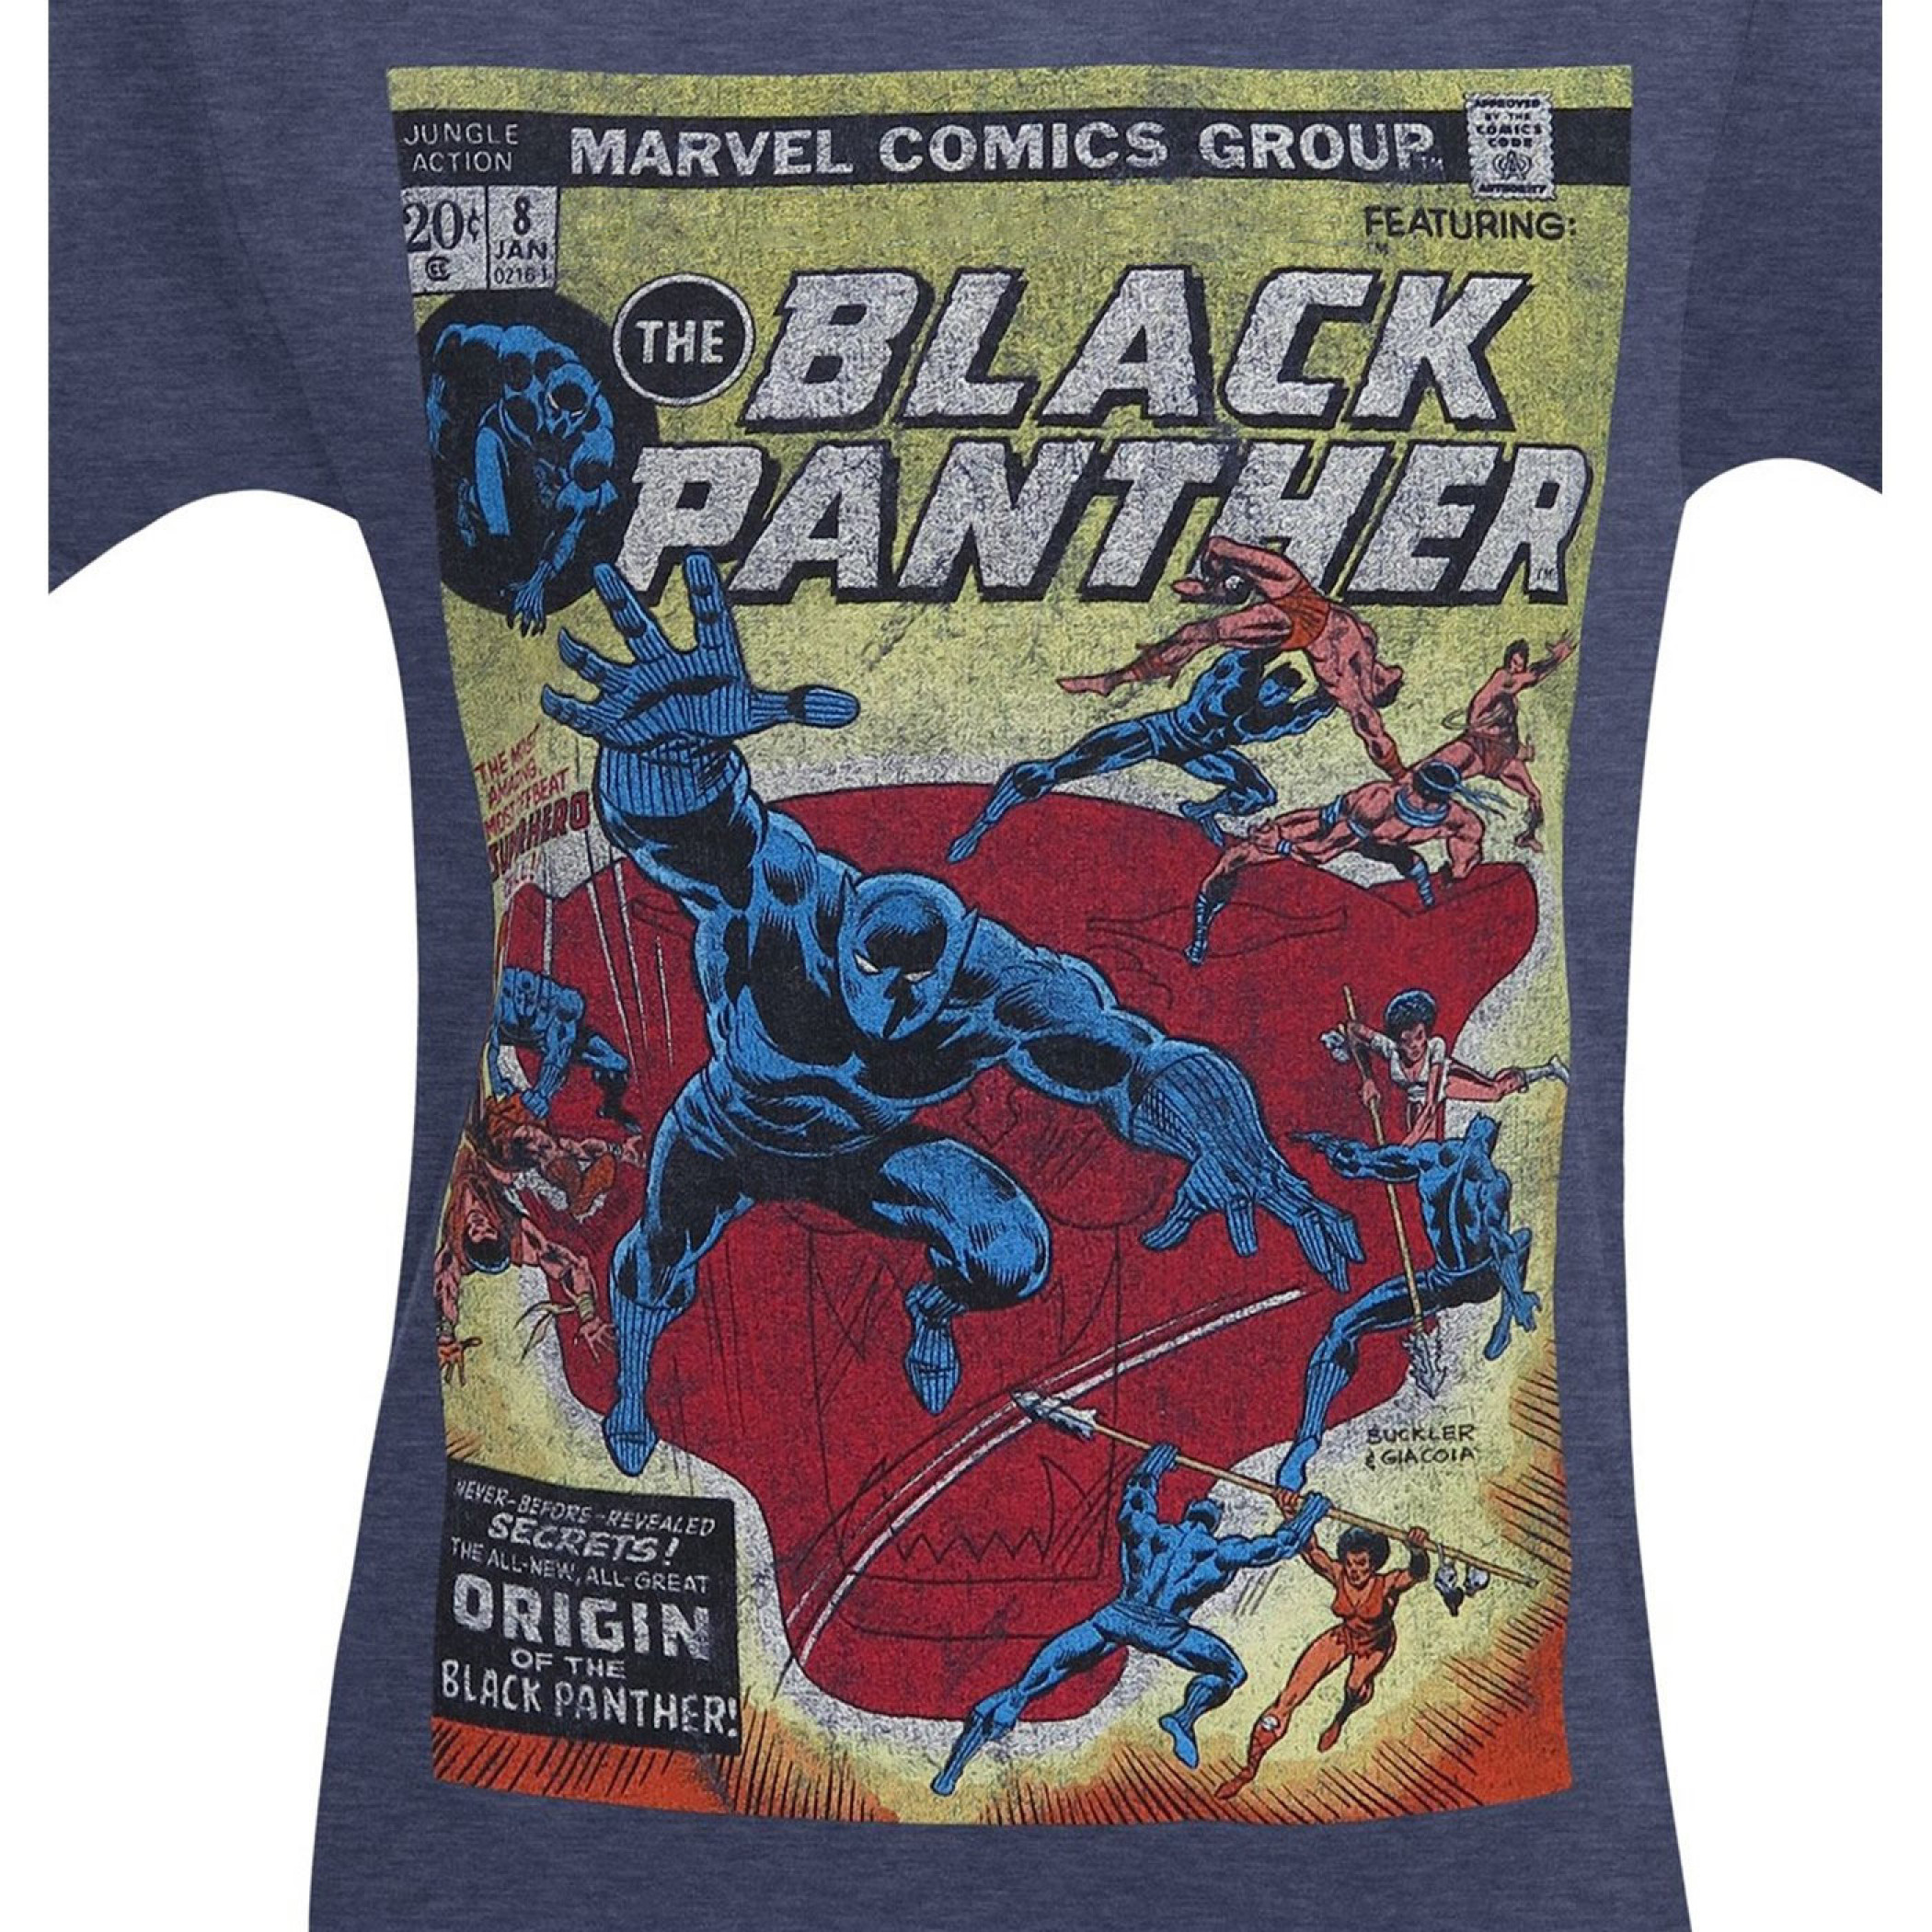 Black Panther Jungle Action #8 Cover Men's T-Shirt